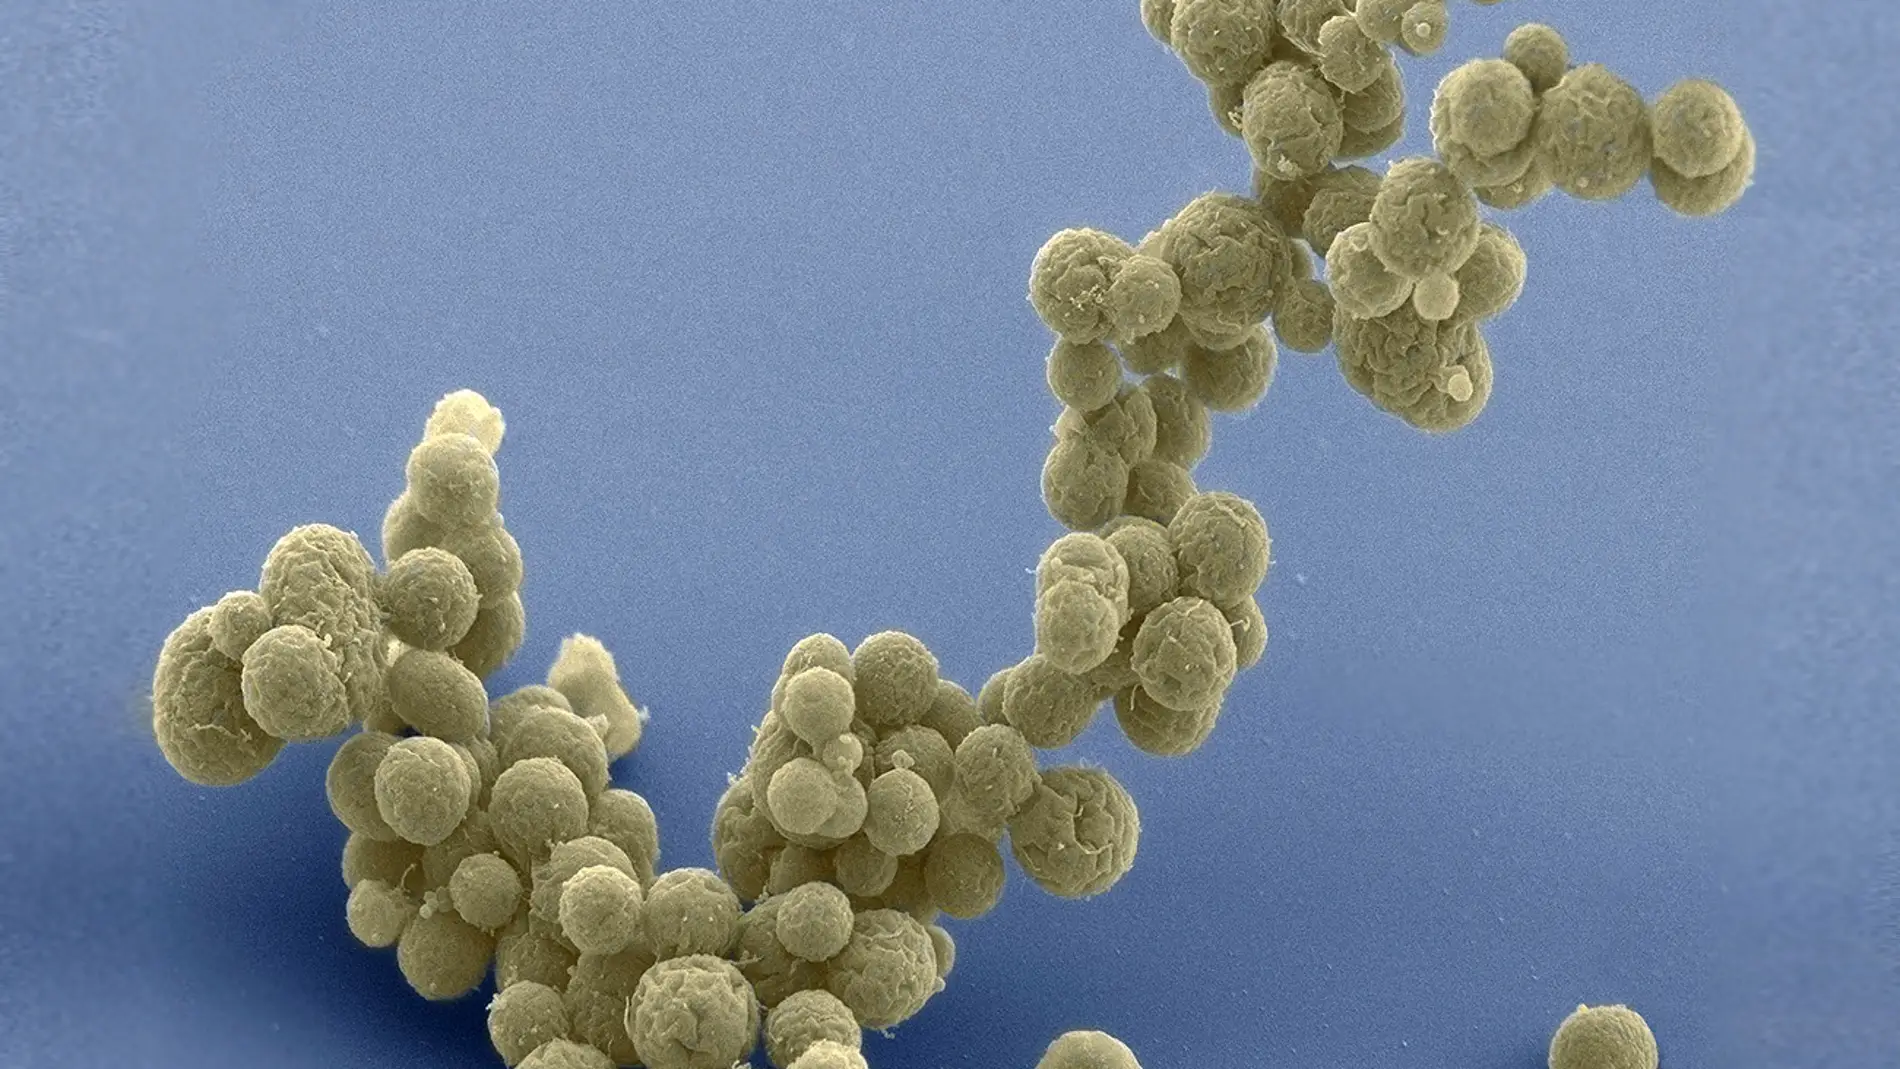 Mycoplasma mycoides simplificada de forma sintética